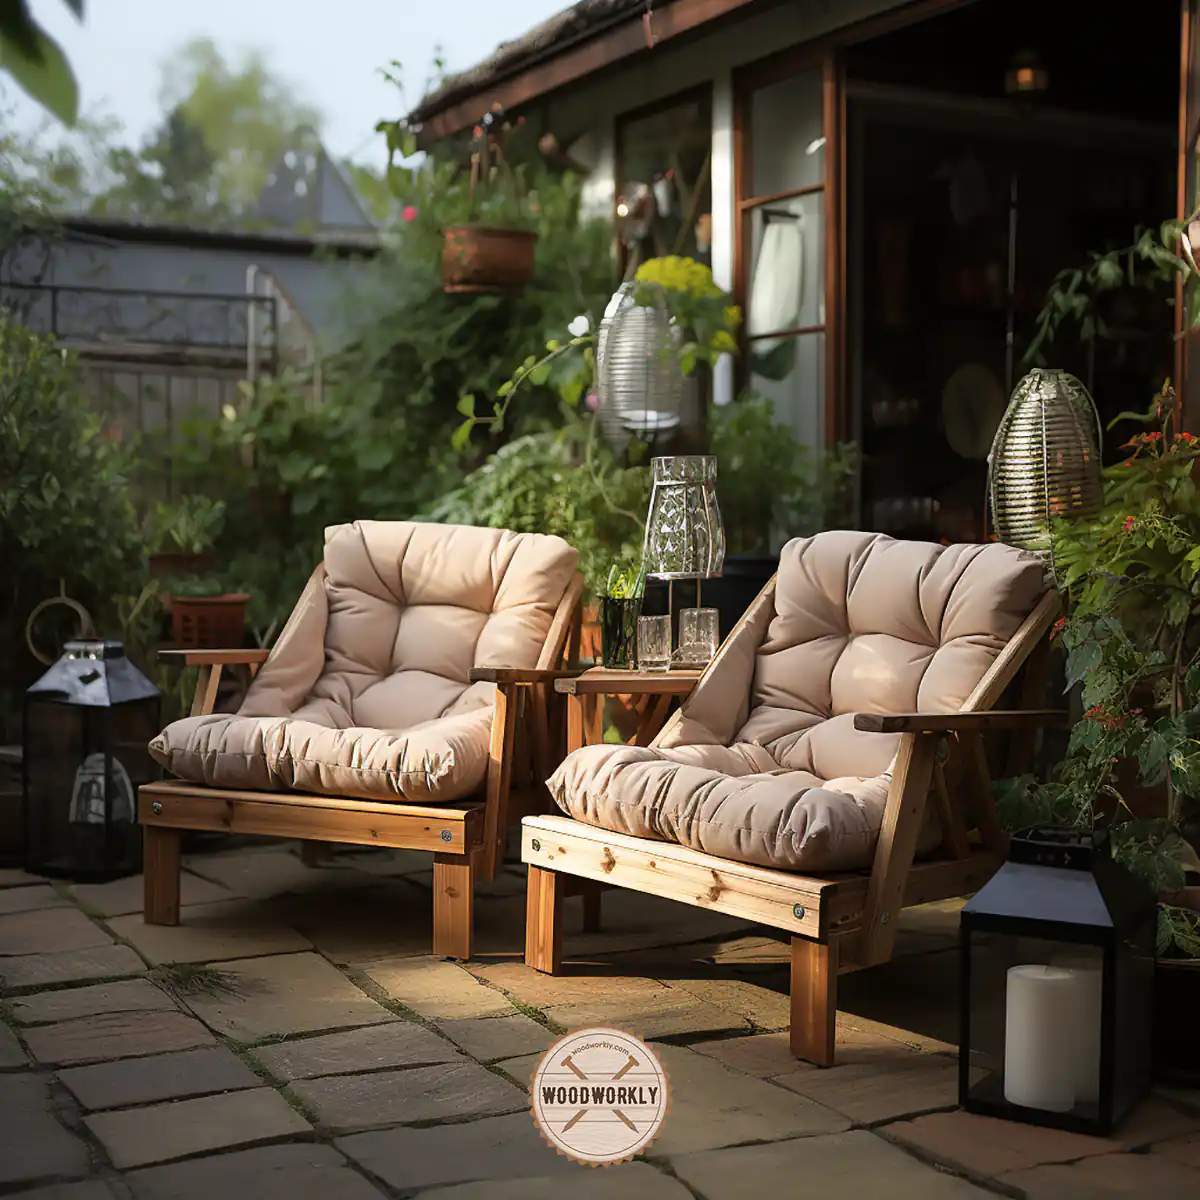 Pine wood outdoor furniture